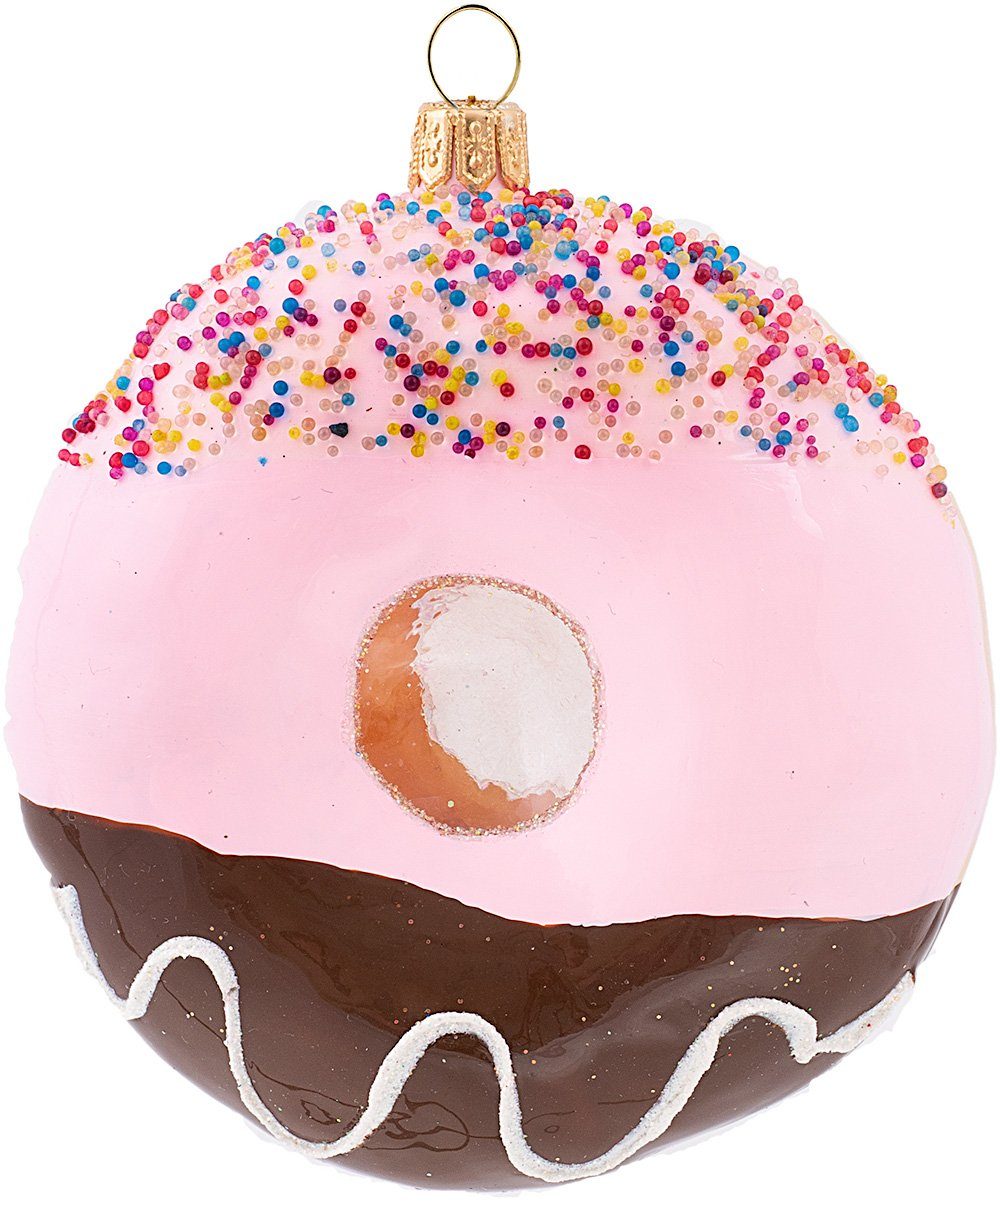 IMPULS Christbaumschmuck, Christbaumschmuck Glas Donut mit bunten Streuseln 6cm rosa